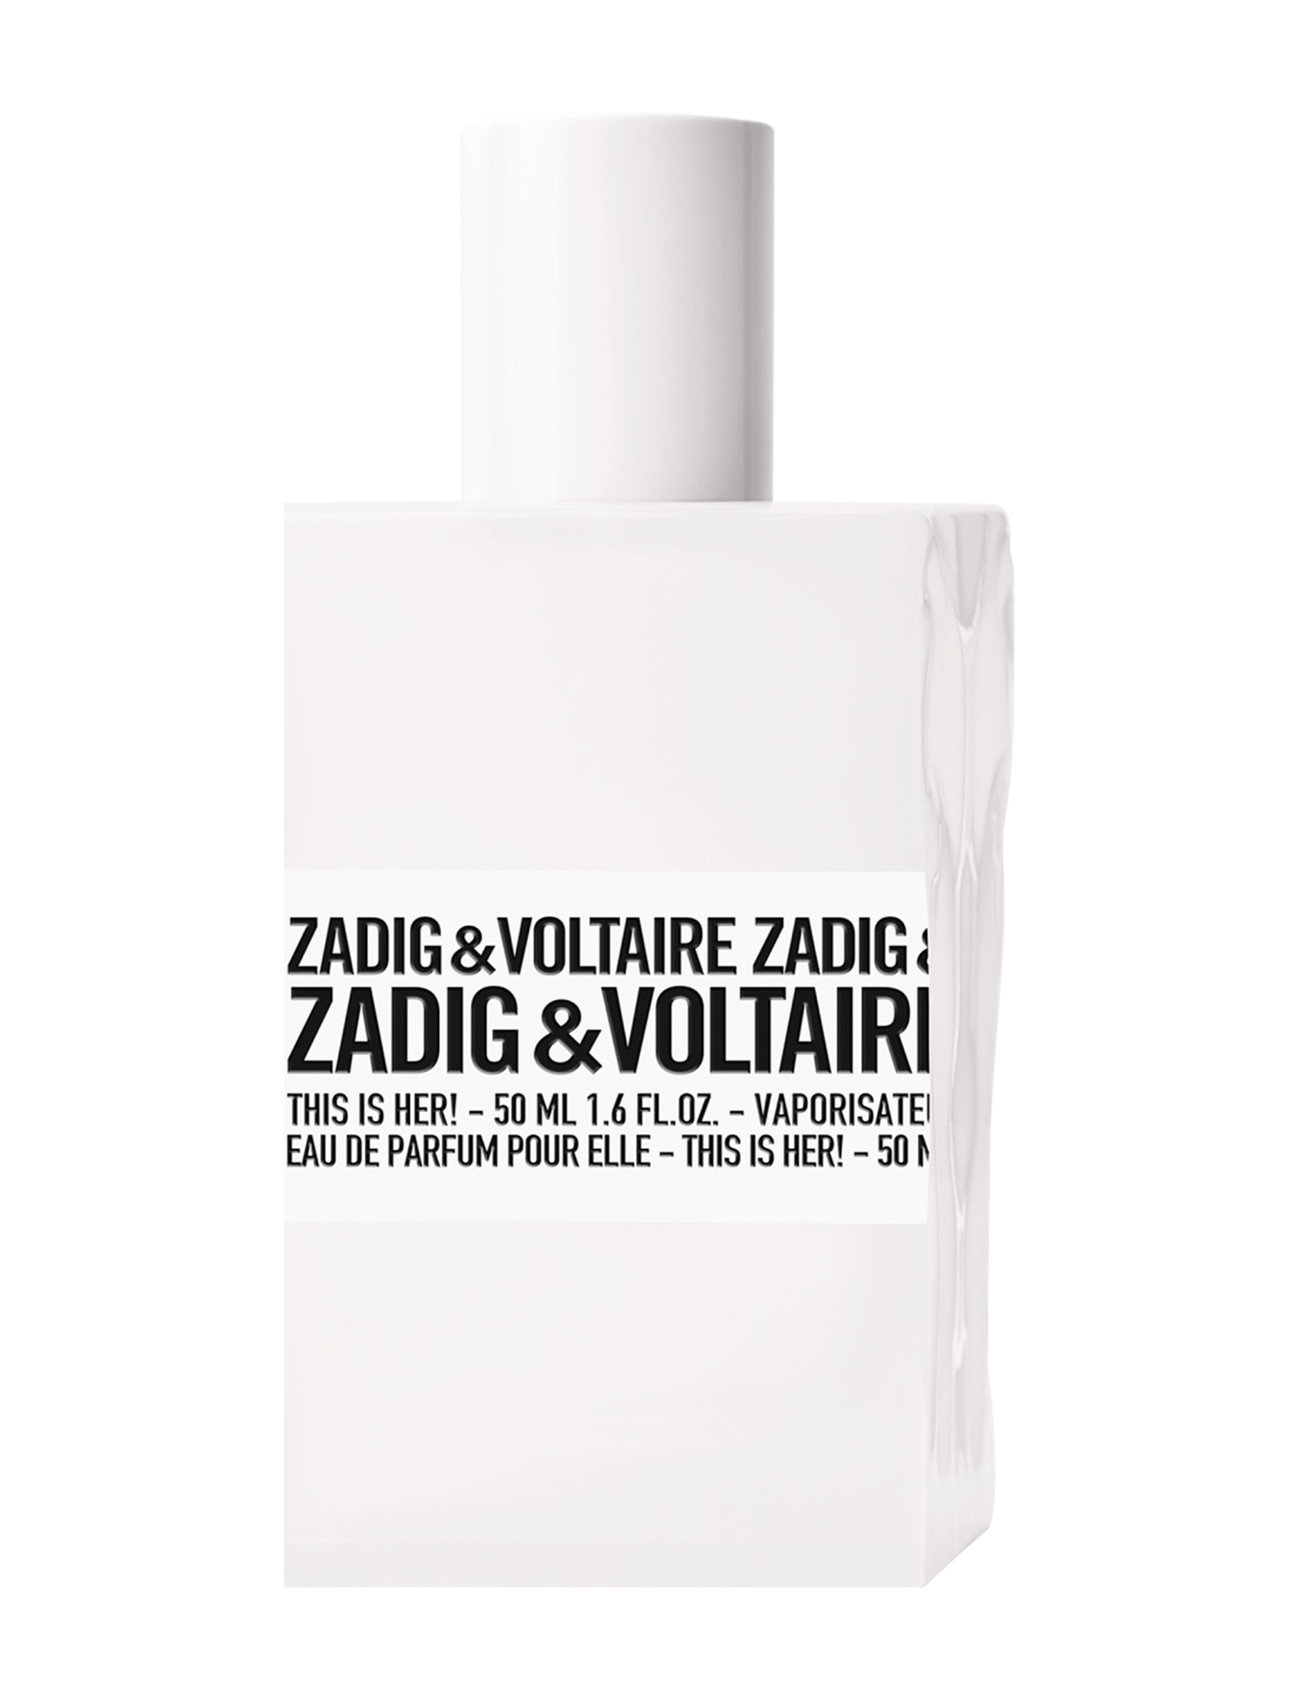 This Is Her! Edp 50 Ml Parfume Eau De Parfum Nude Zadig & Voltaire Fragrance